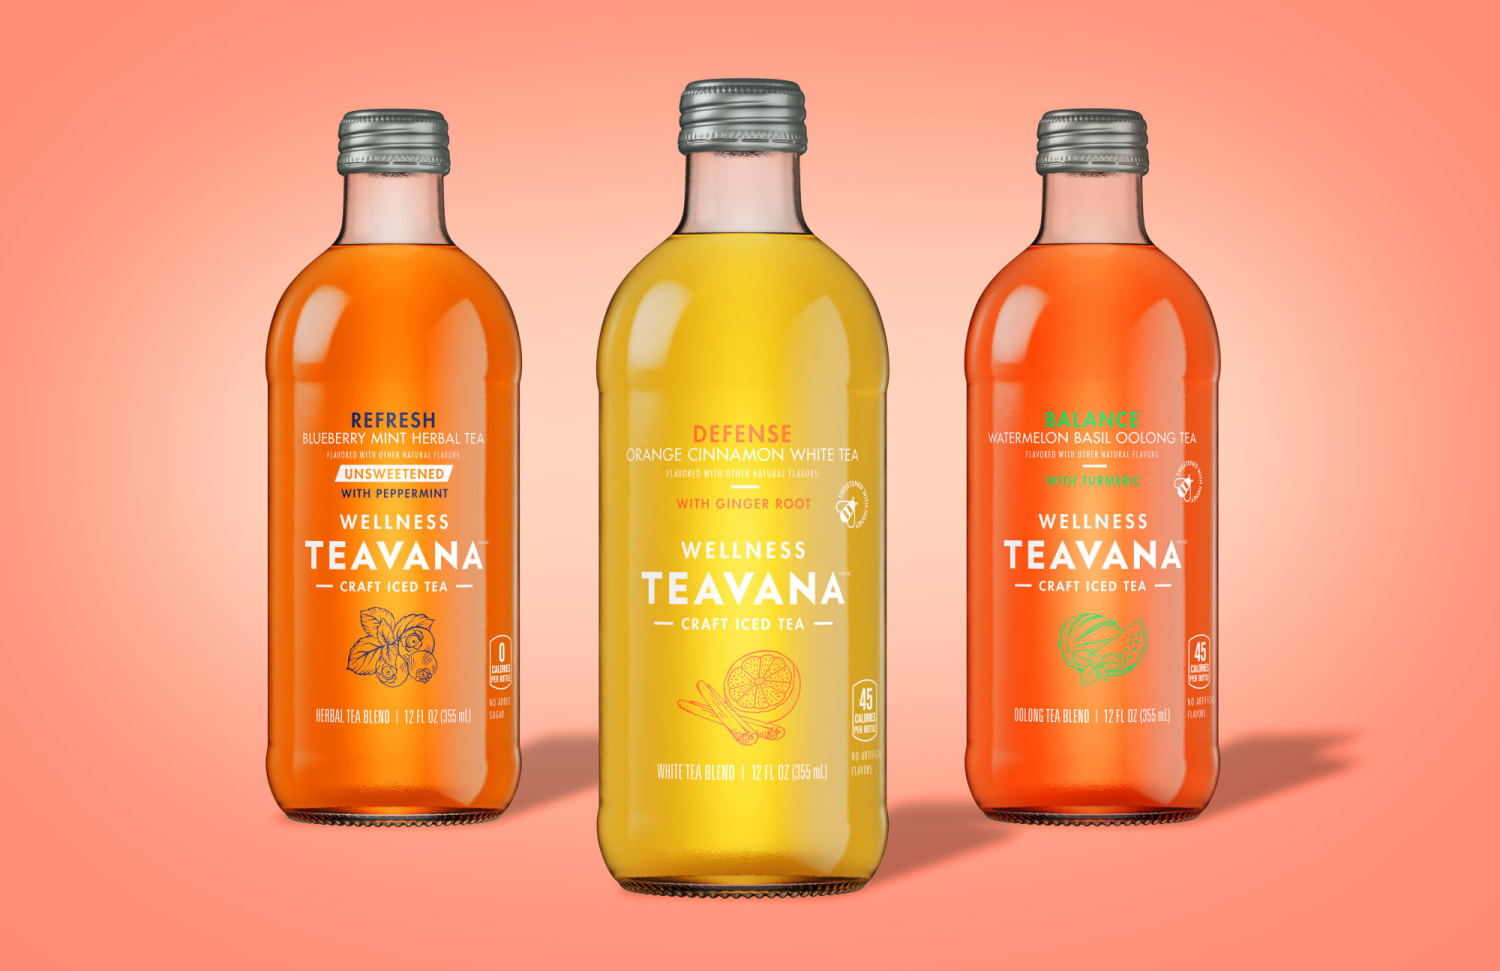 Teavana summer teas offer balance, refreshment and relaxation